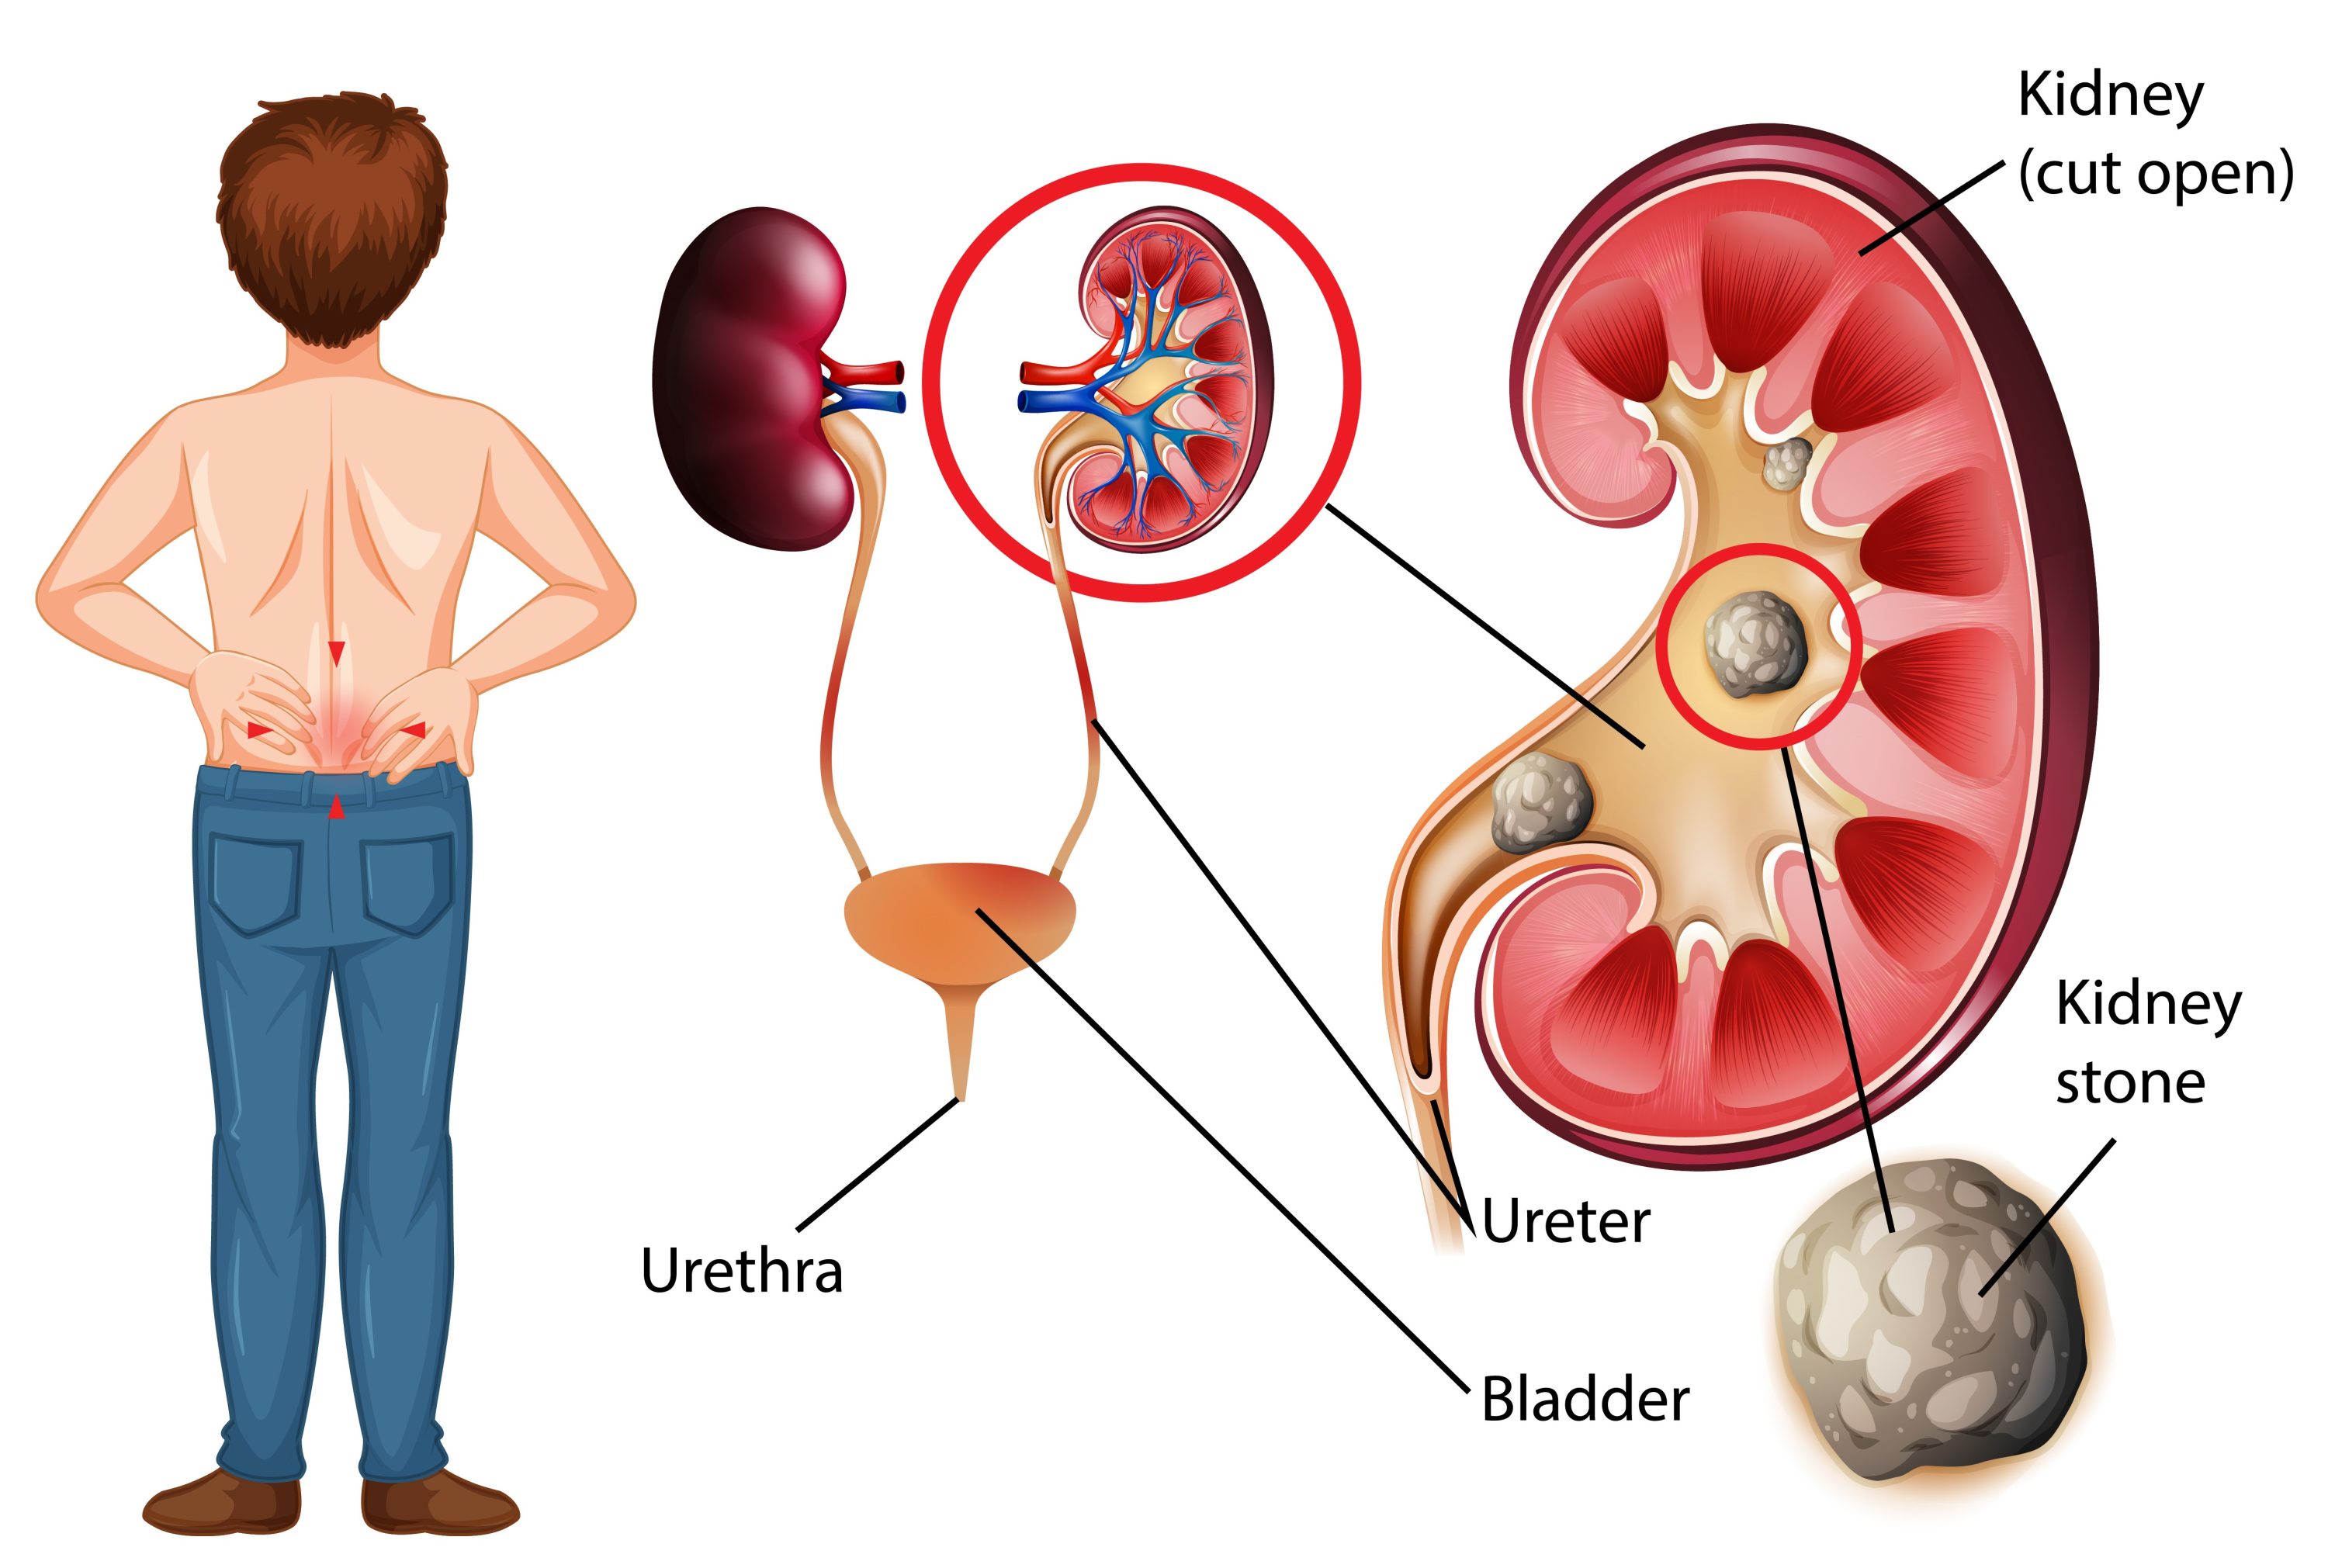 Kidney stone, reason of shrunken kidney